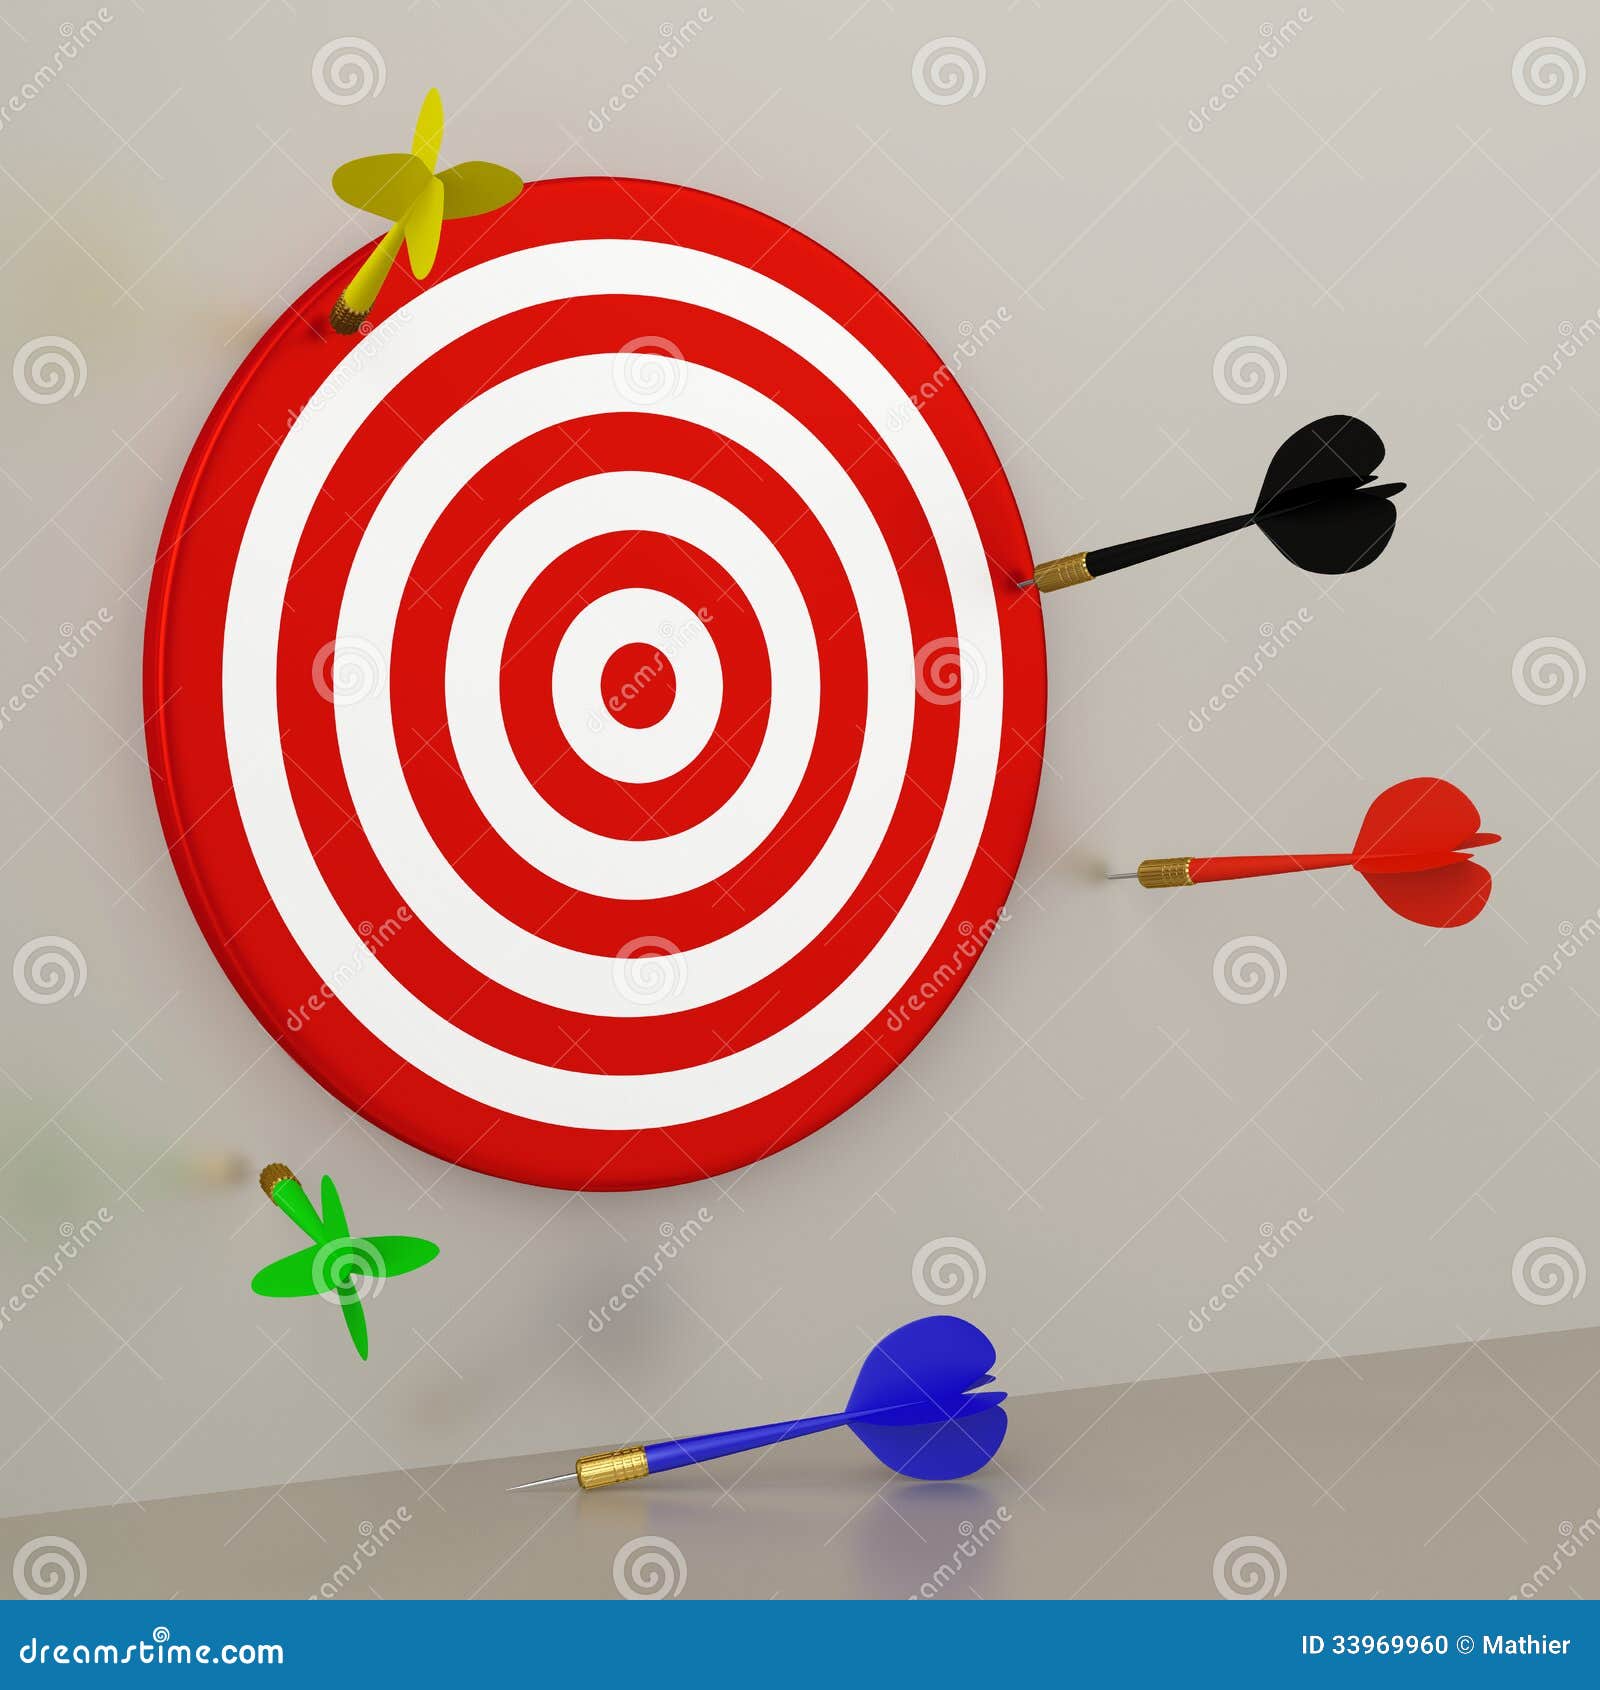 target and darts